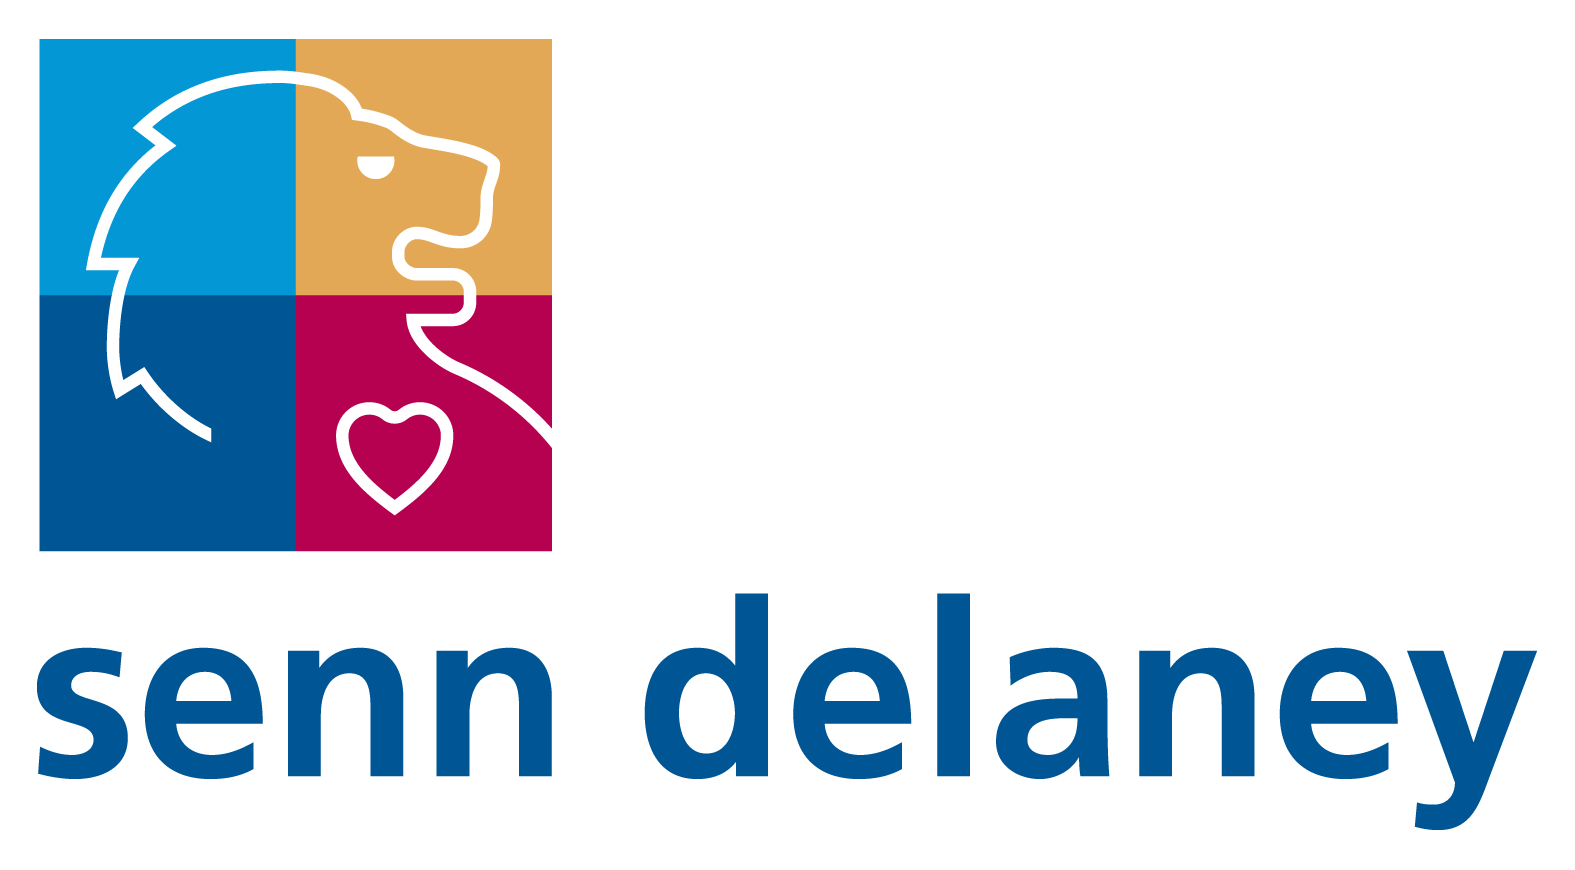 Senn Delaney corporate logo